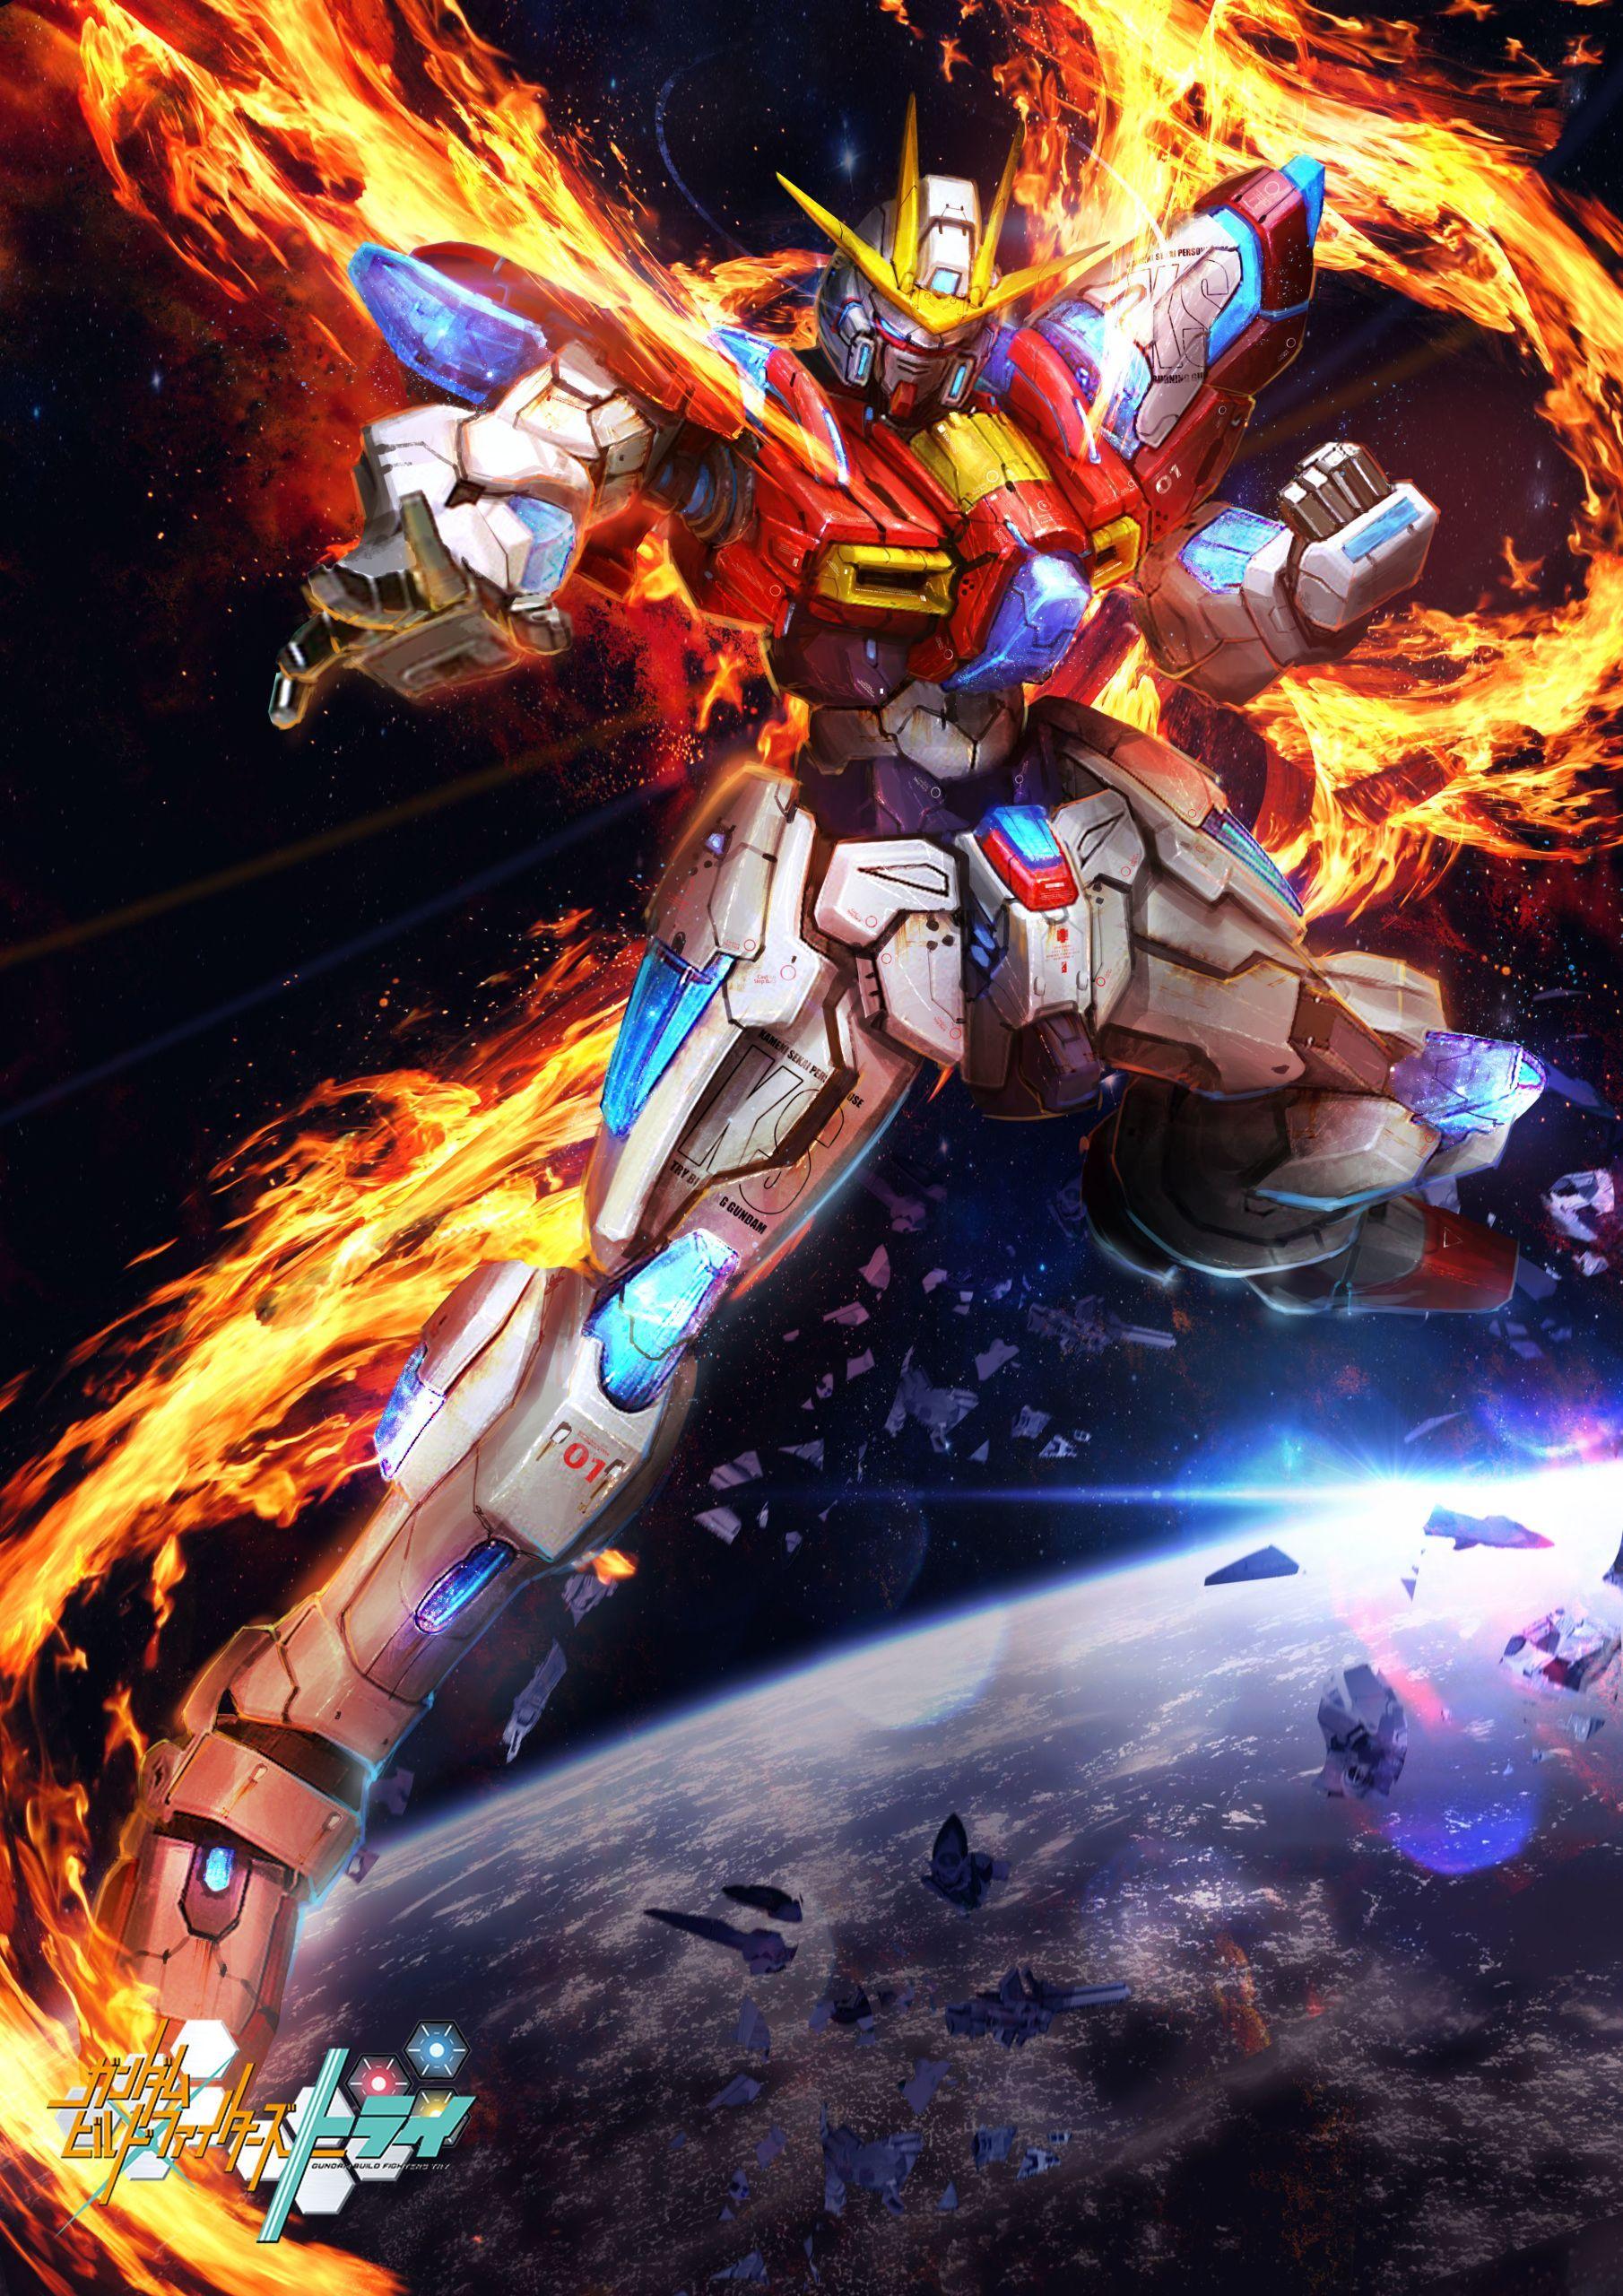 Try Burning Gundam Poster Toys Shop, Gunpla Model Kits